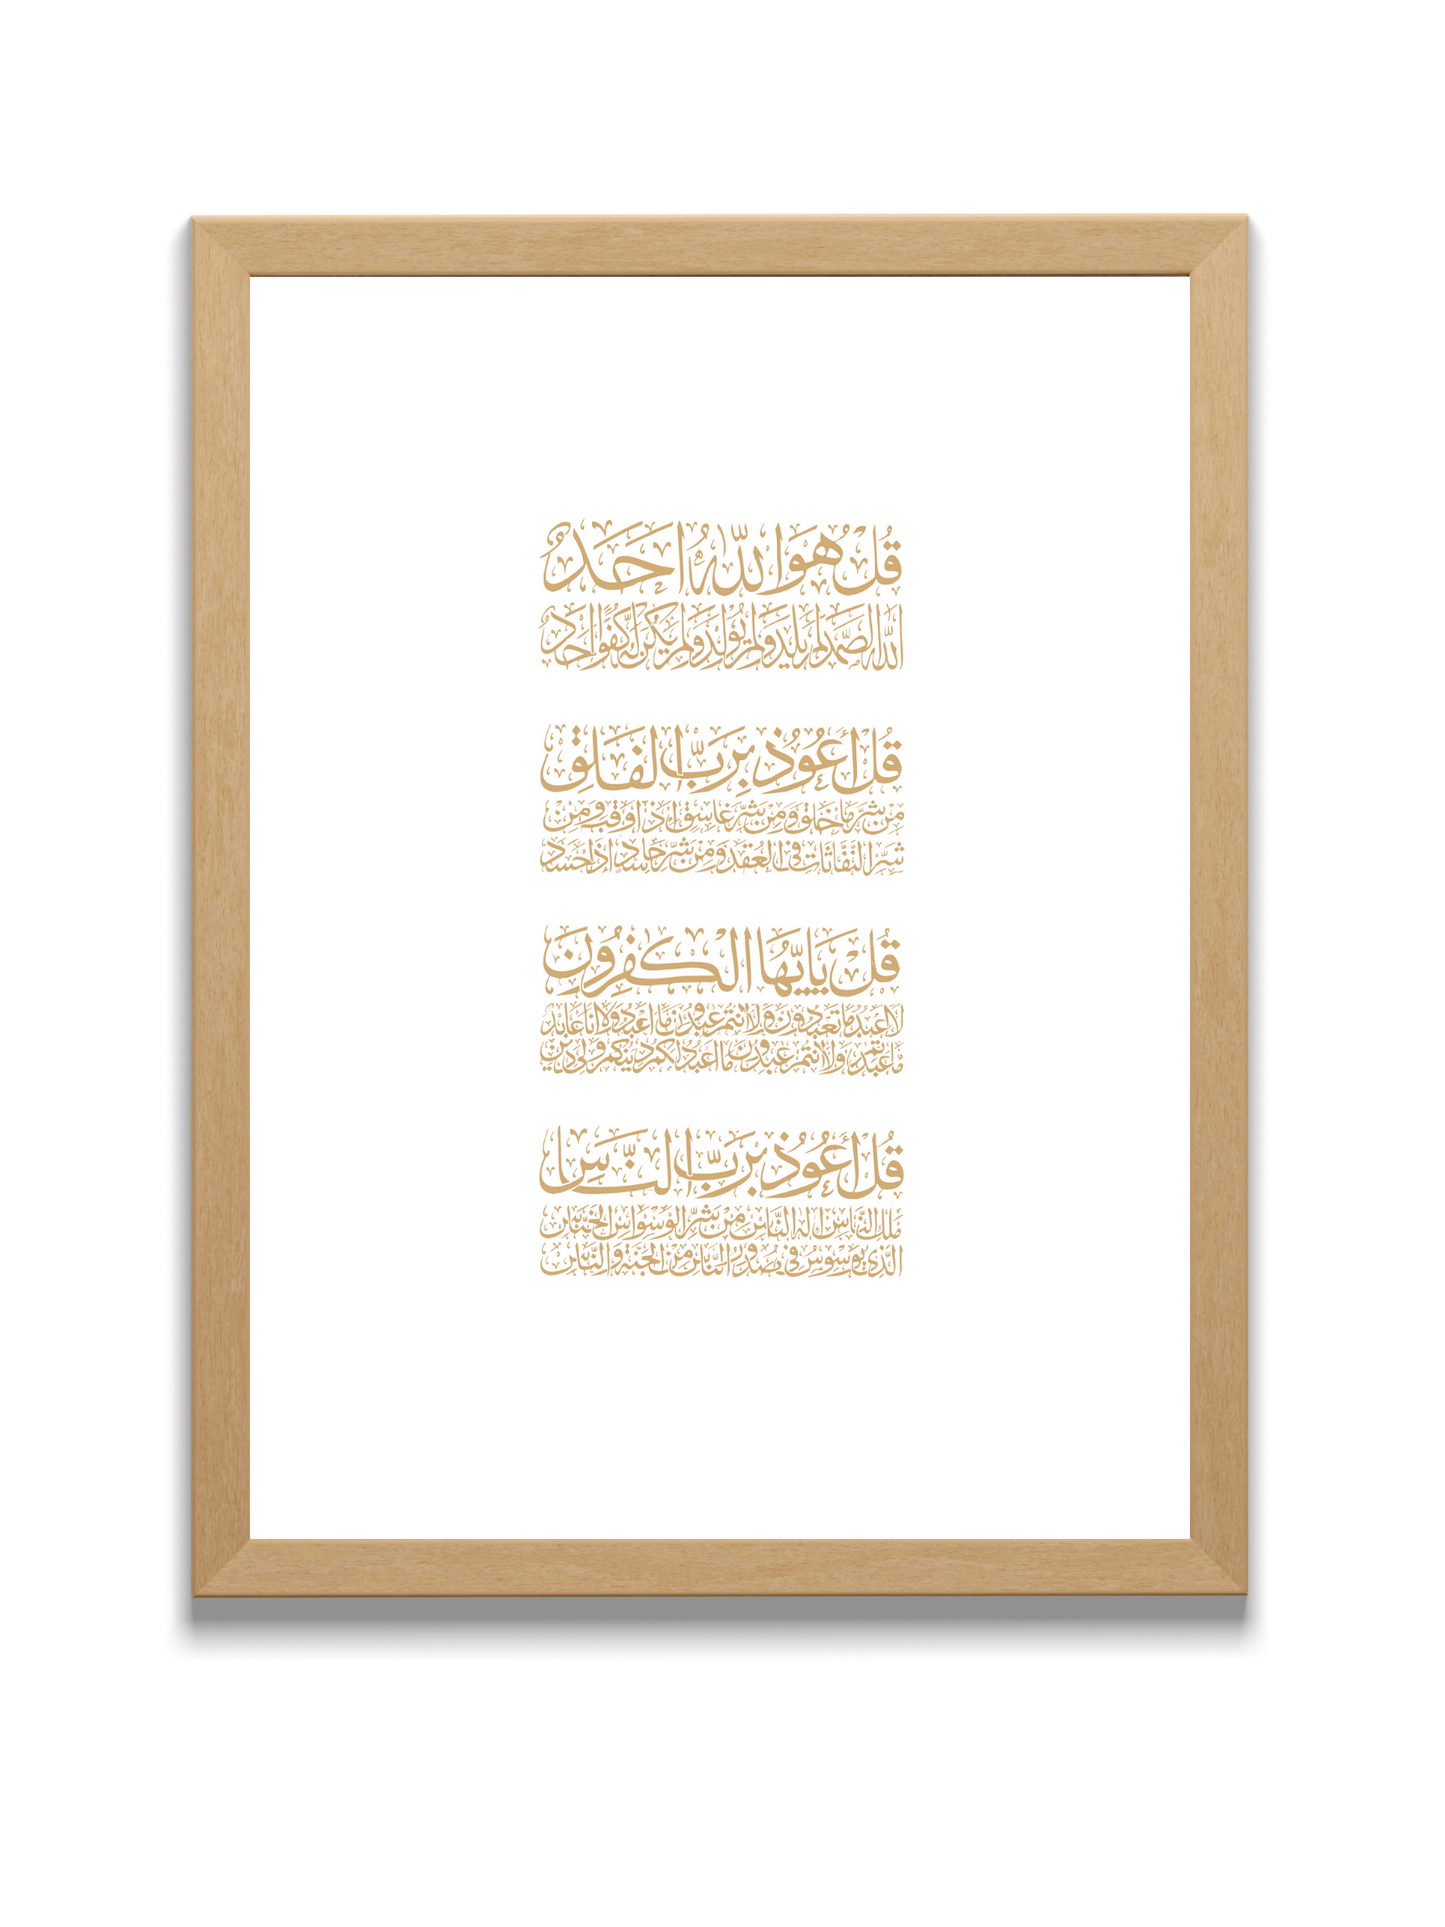 Four “QULs” | Quran | Naskh Calligraphy | White